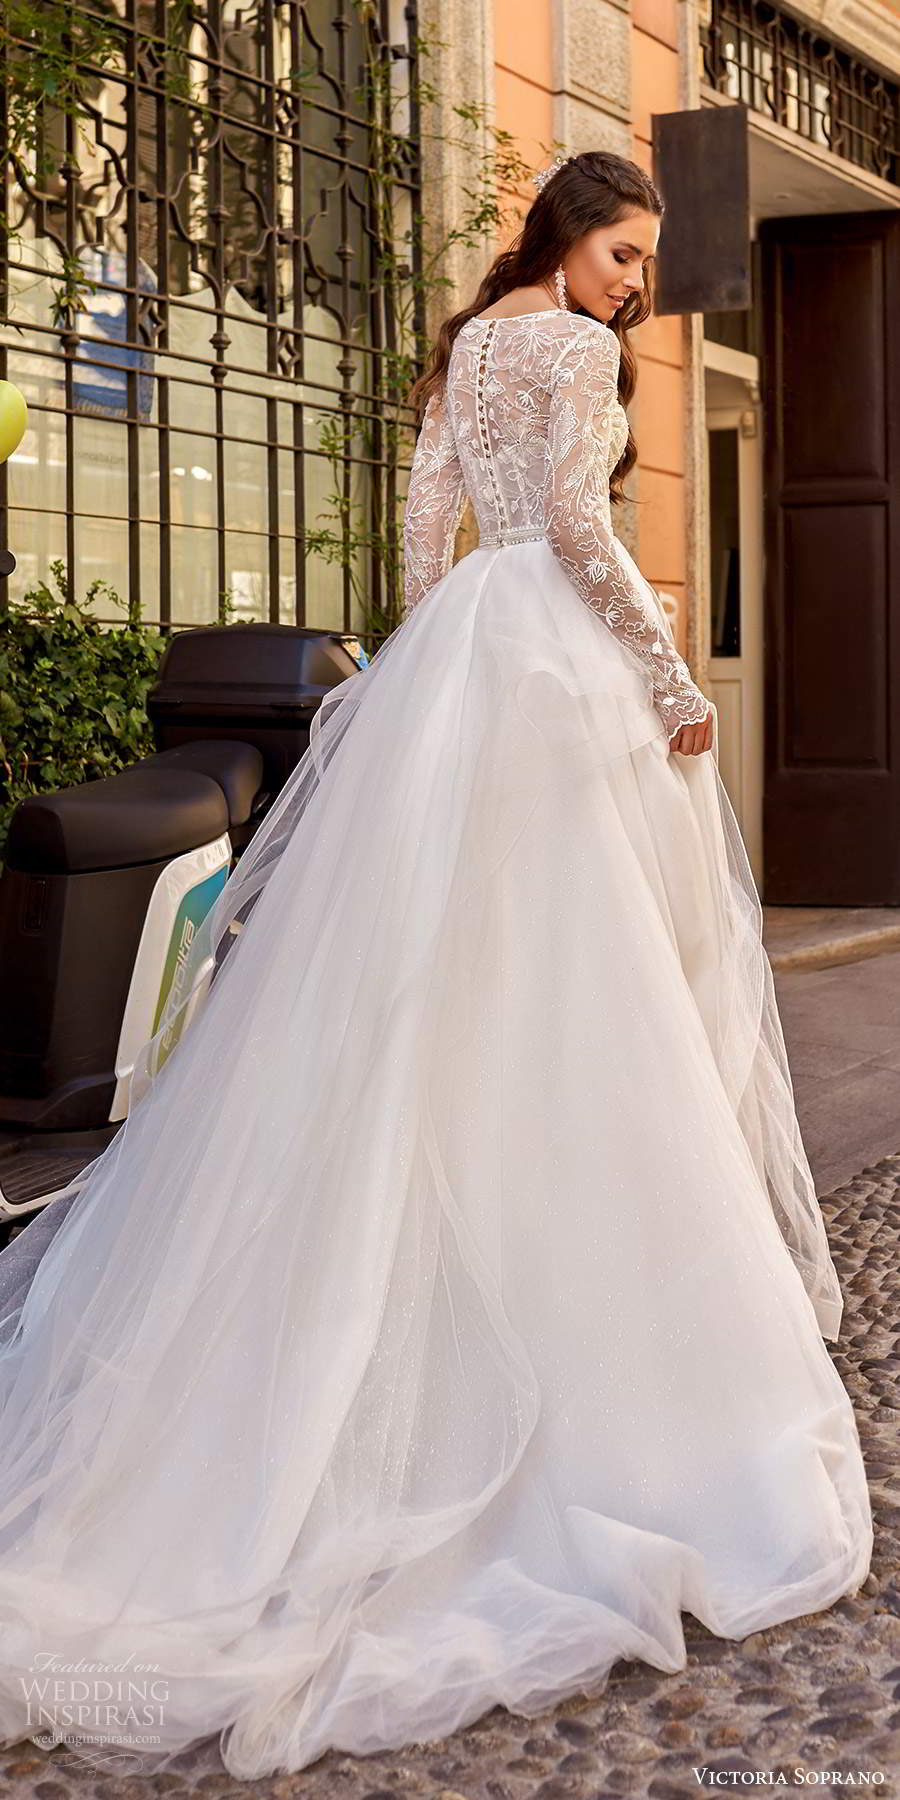 victoria soprano fall 2020 bridal illusion long sleeves v neckline embellished bodice a line ball gown wedding dress chapel train (20) bv